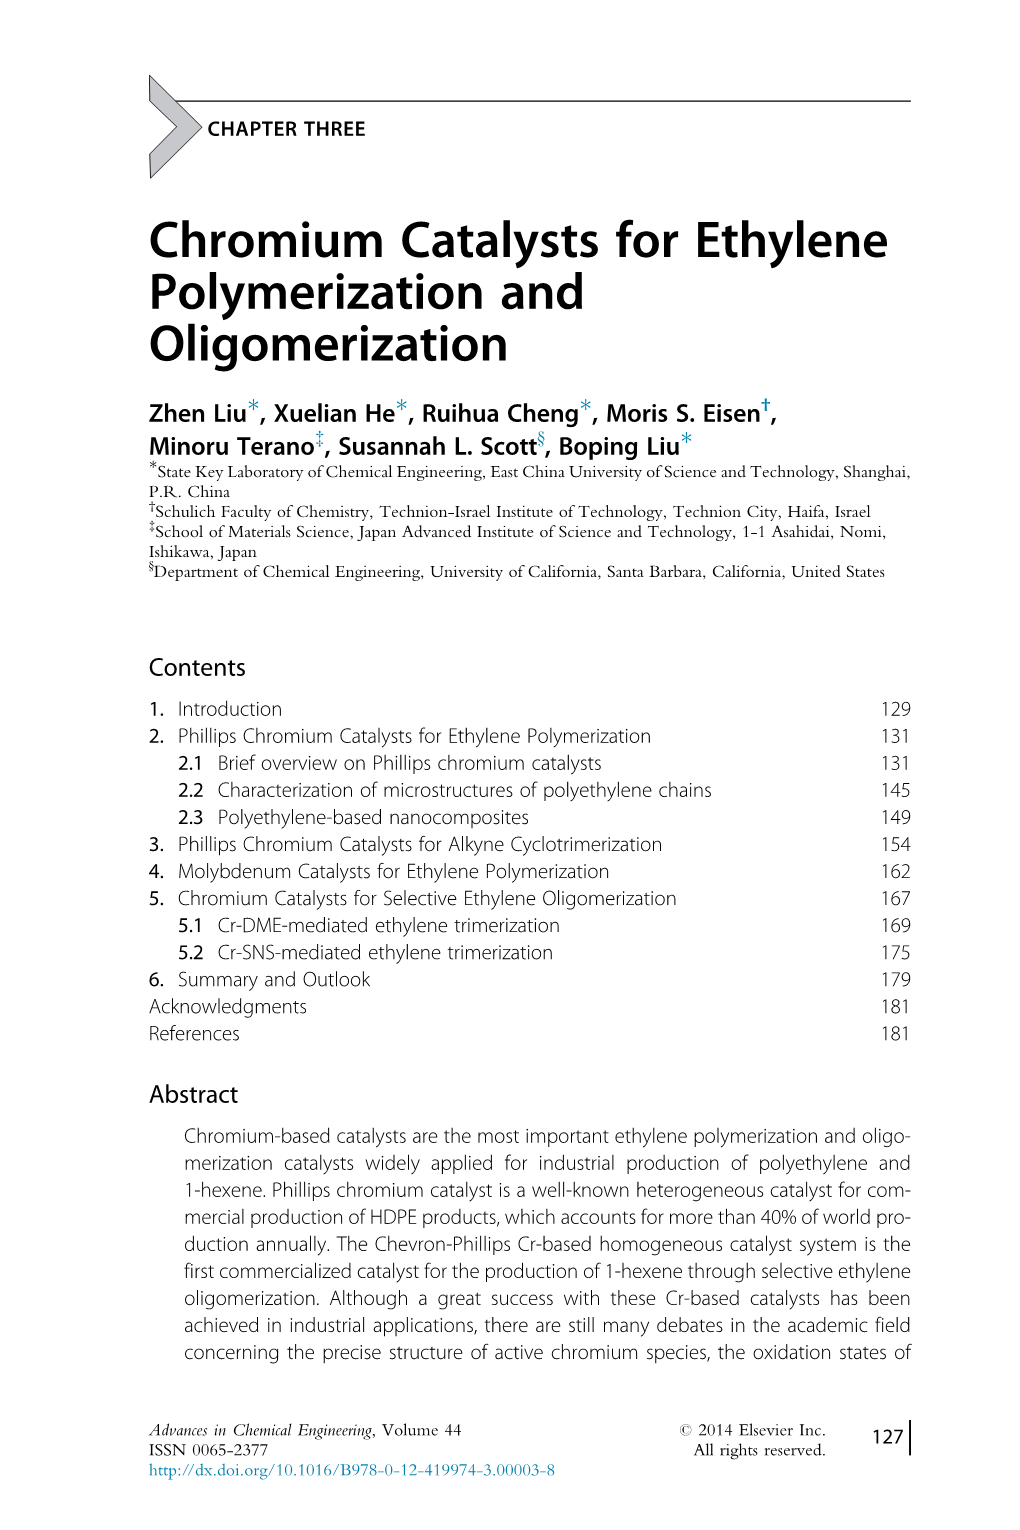 Chromium Catalysts for Ethylene Polymerization and Oligomerization